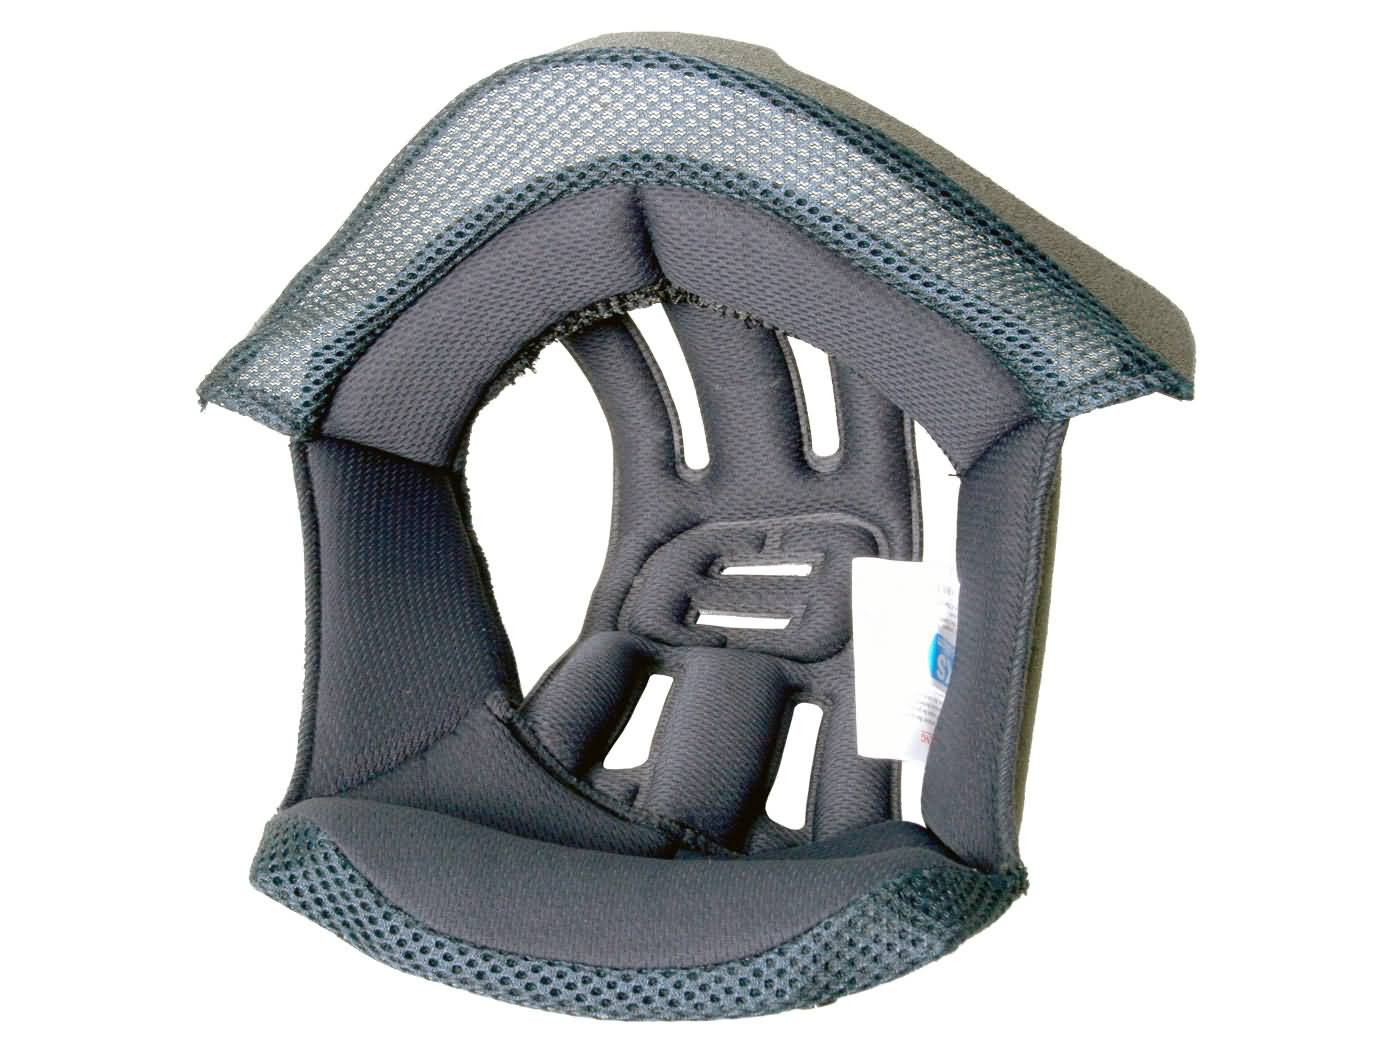 inside pads for helmet Speeds Integral Performance II Size XXL